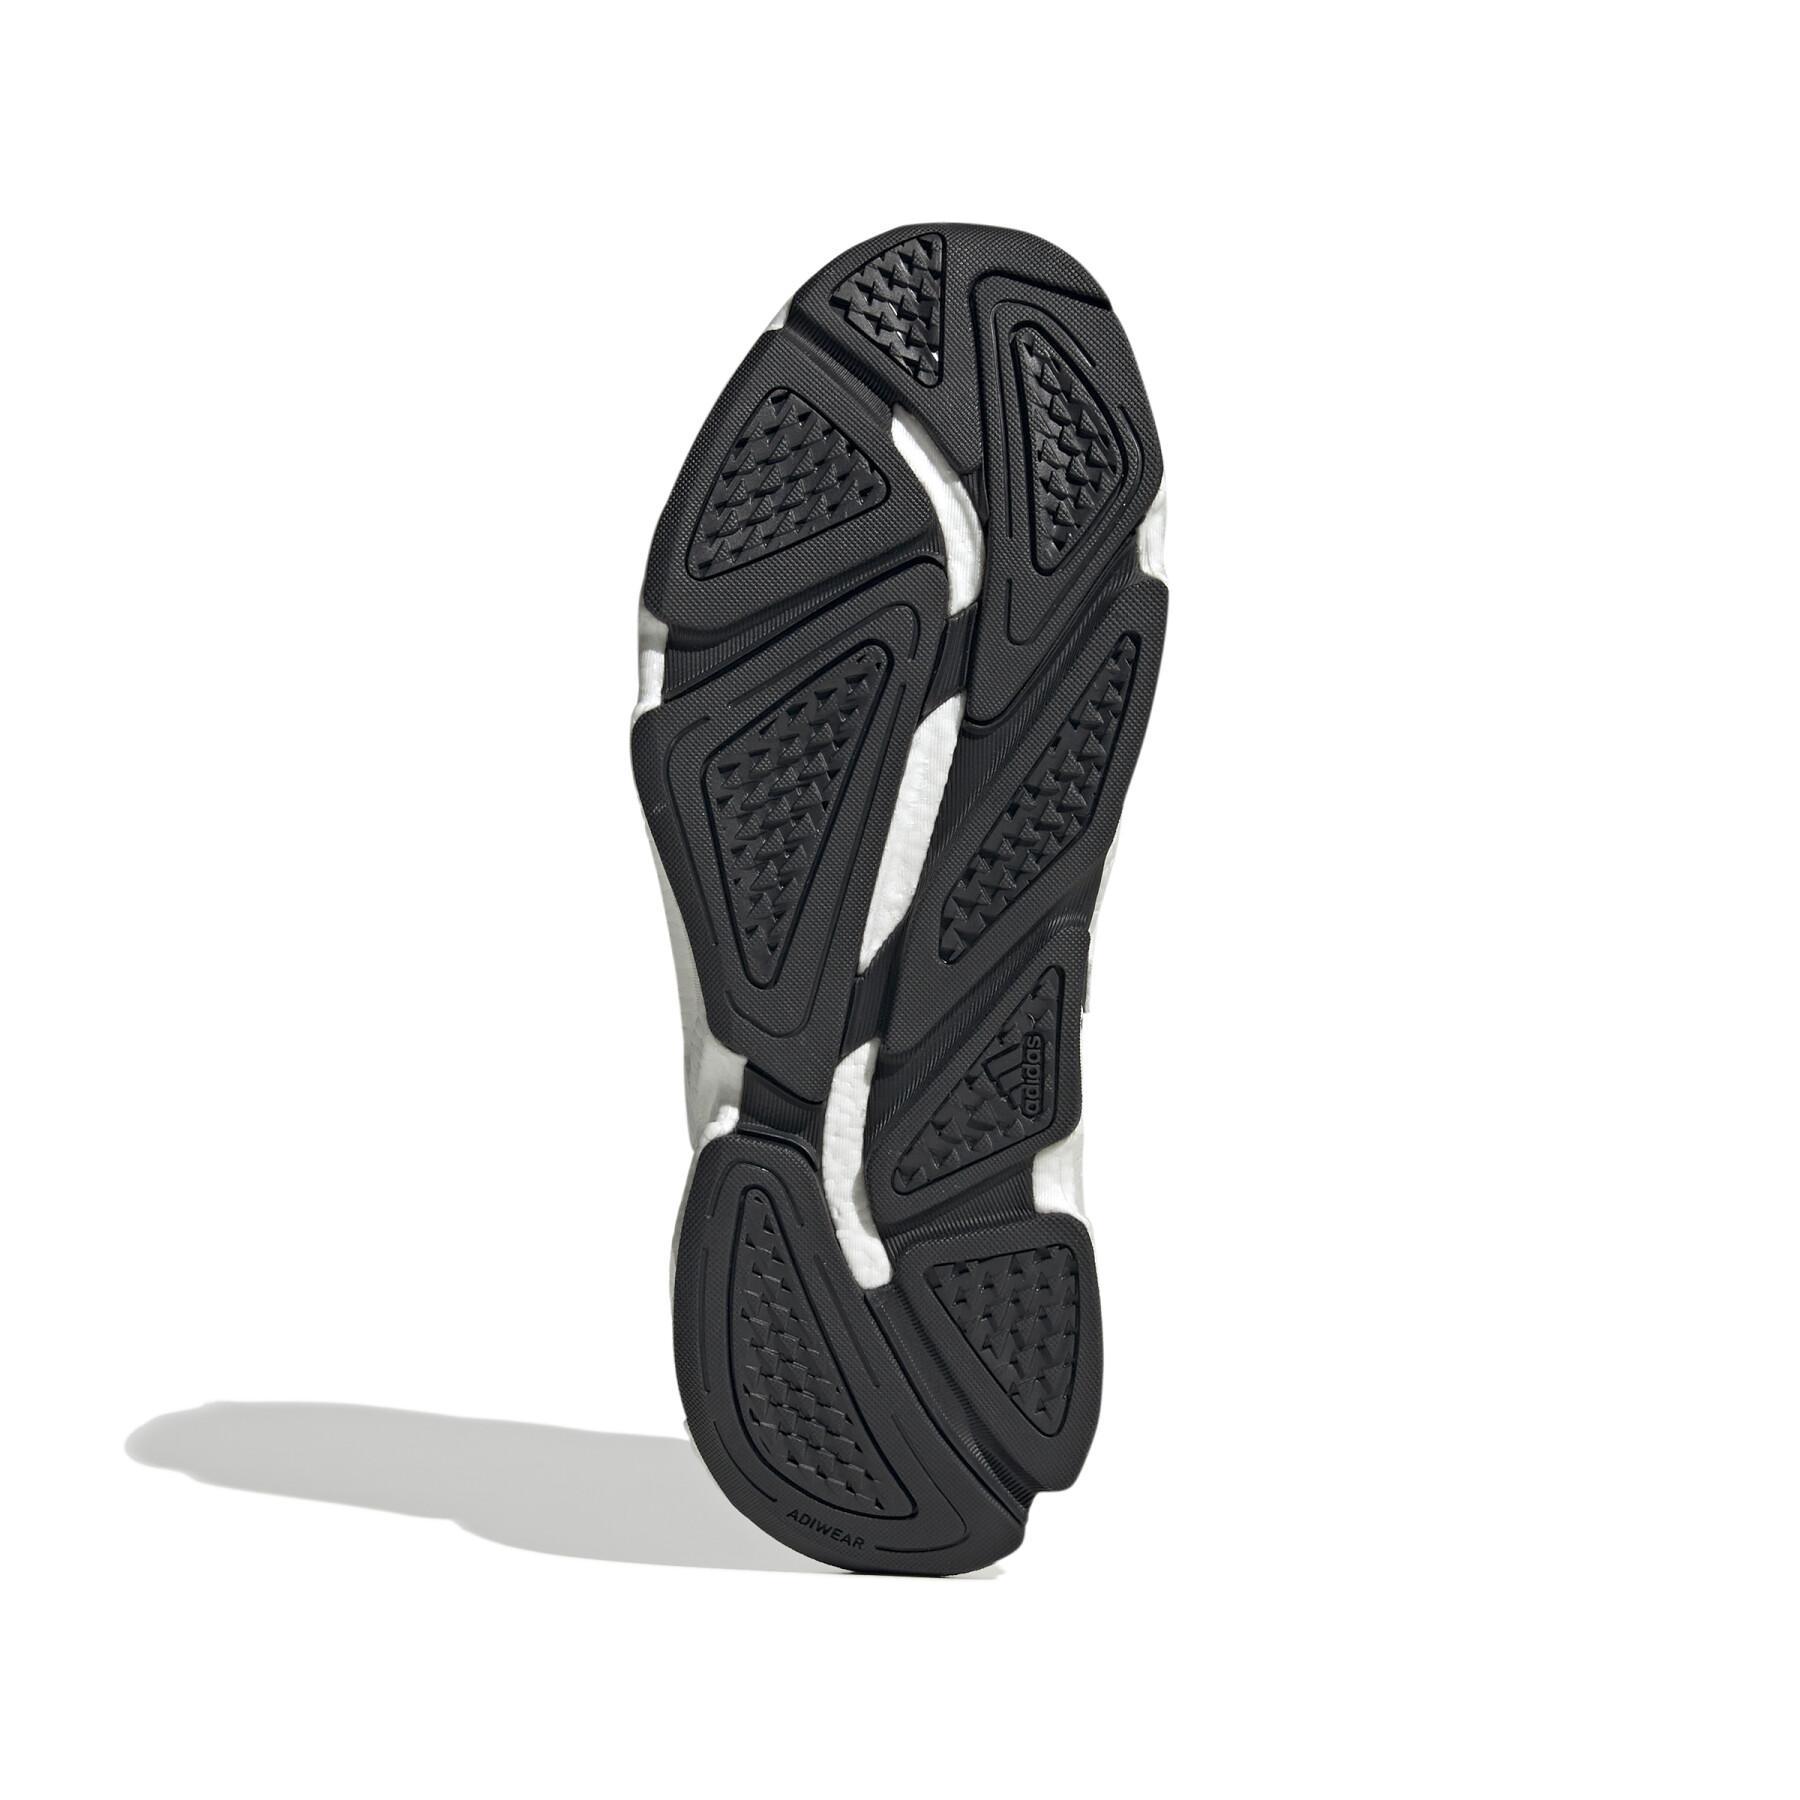 Scarpe running da donna Adidas Karlie Kloss X9000